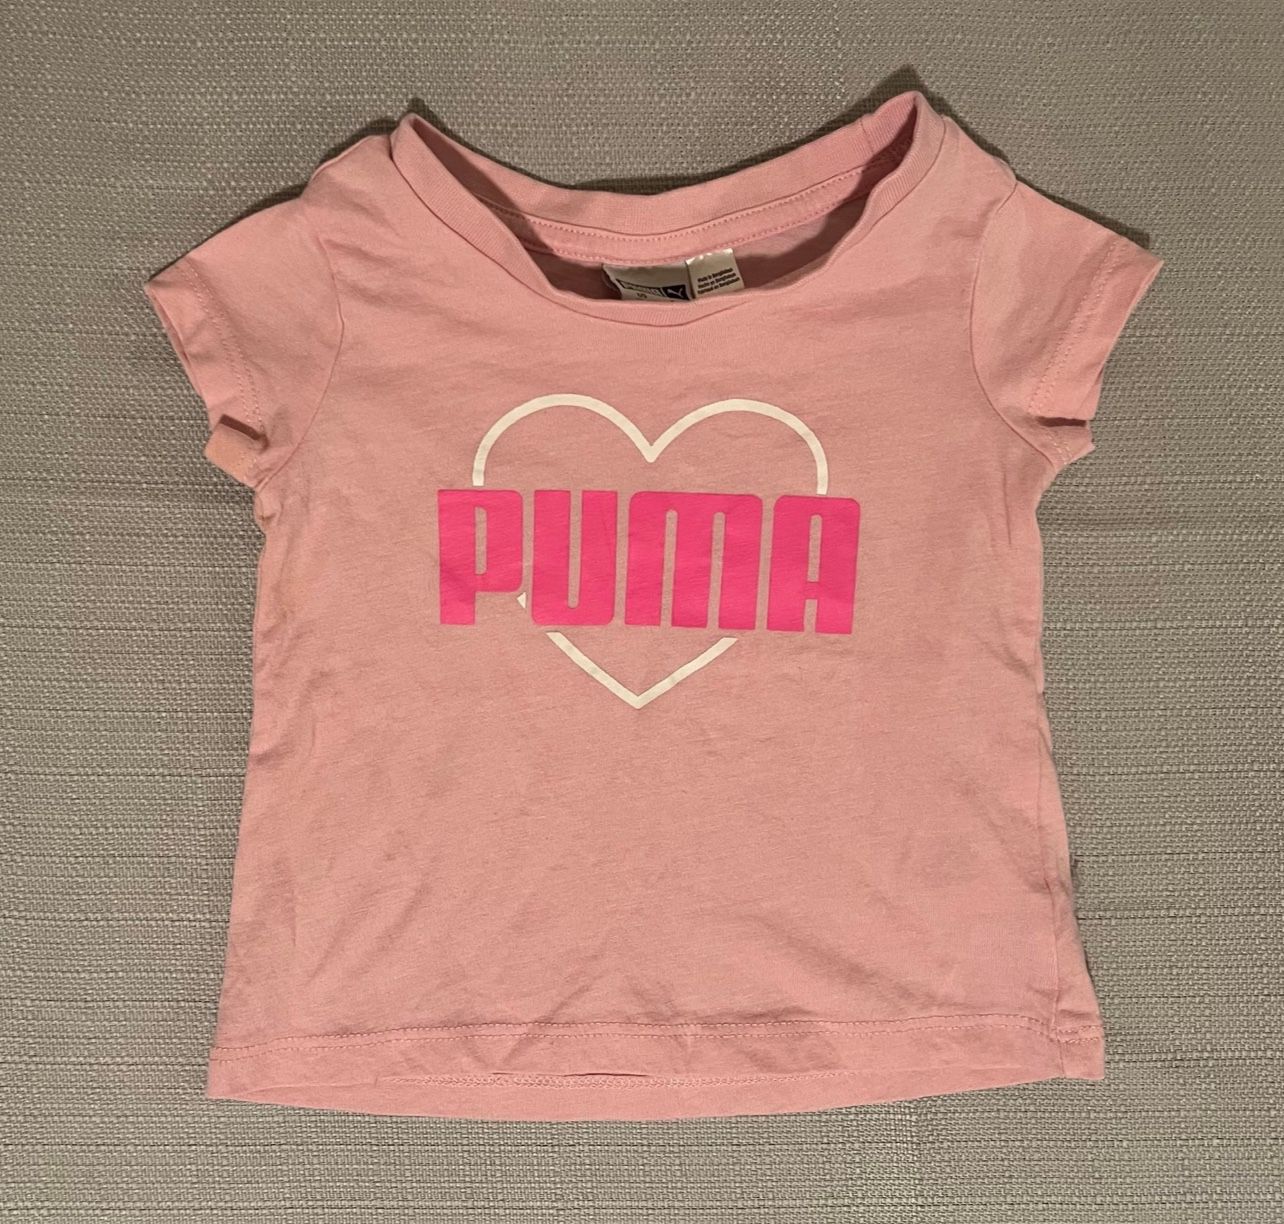 Puma Pink Tee Size 12 Months